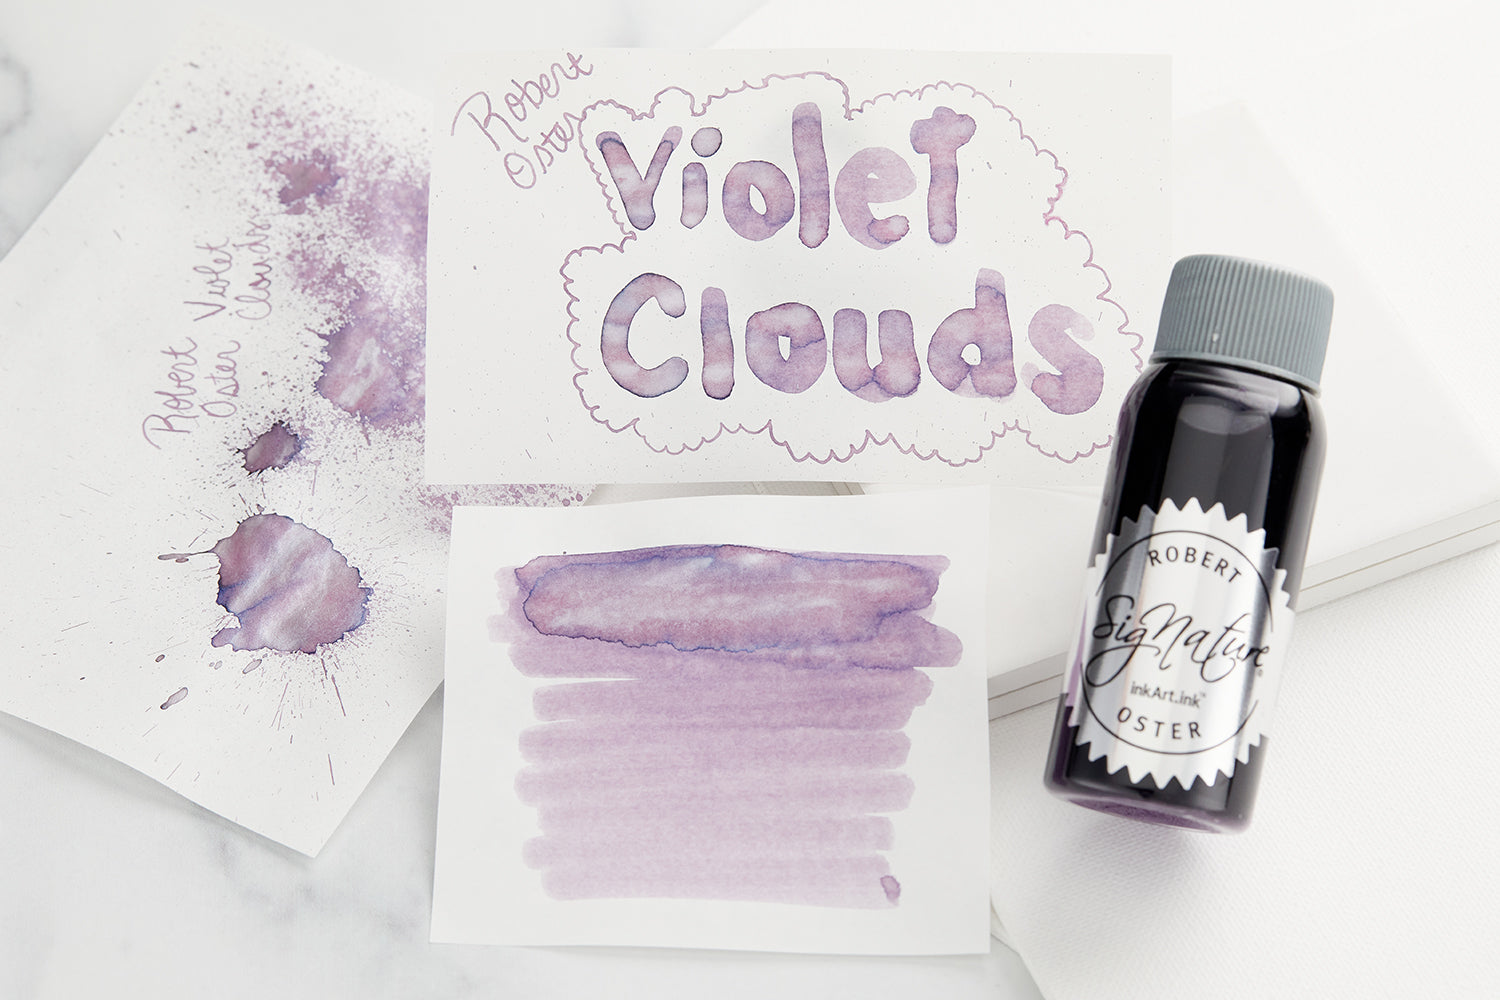 Robert Oster Violet Clouds